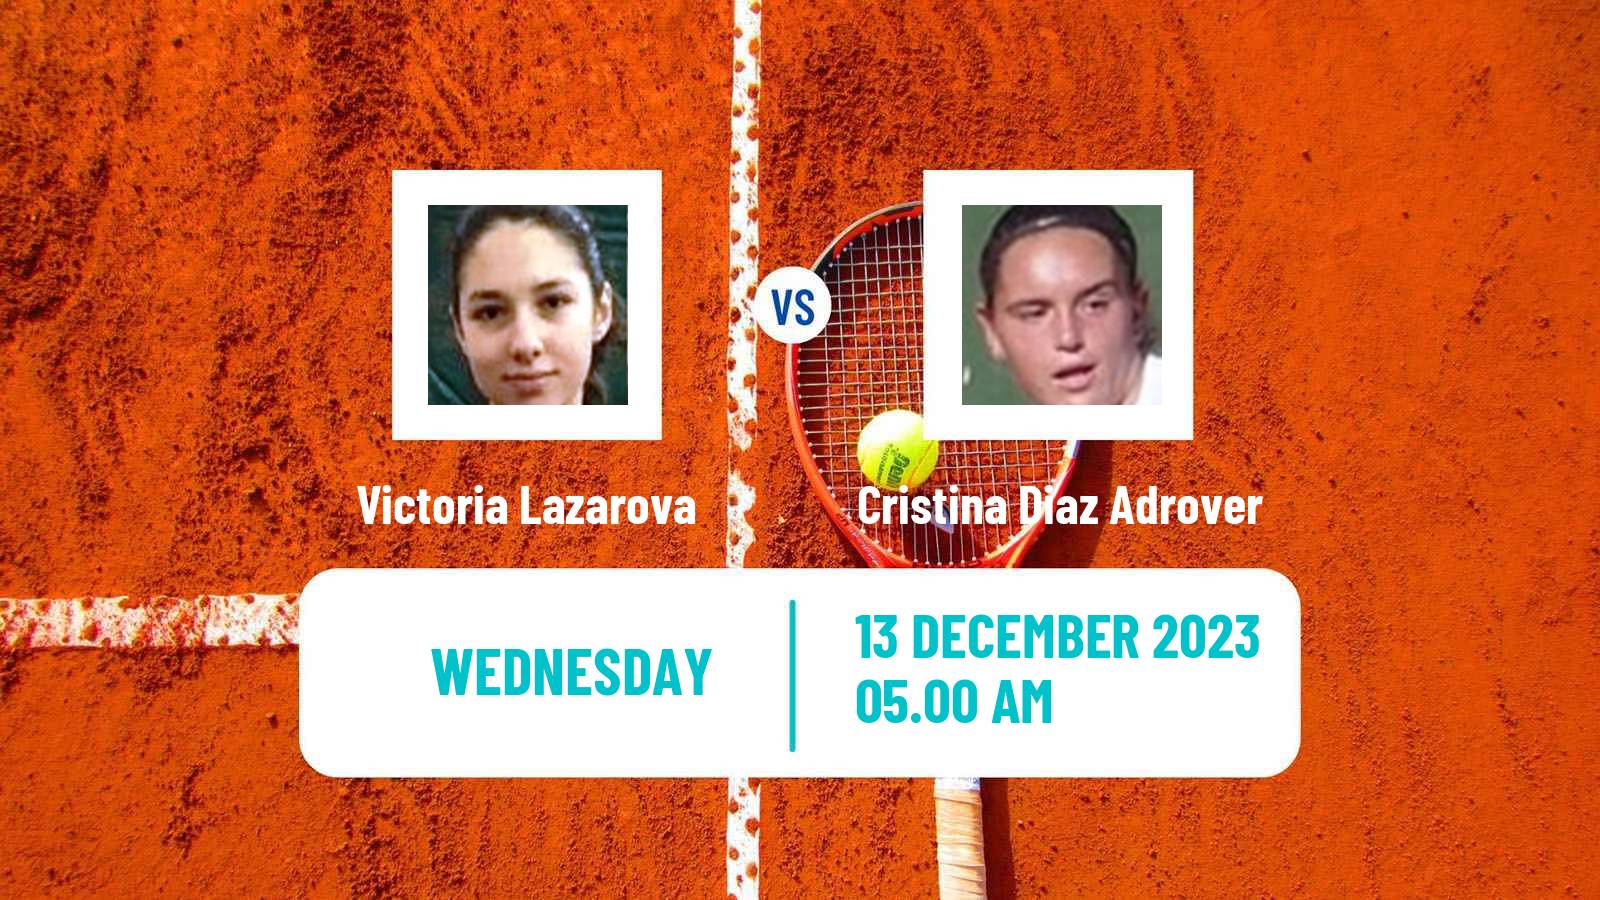 Tennis ITF W15 Melilla Women Victoria Lazarova - Cristina Diaz Adrover